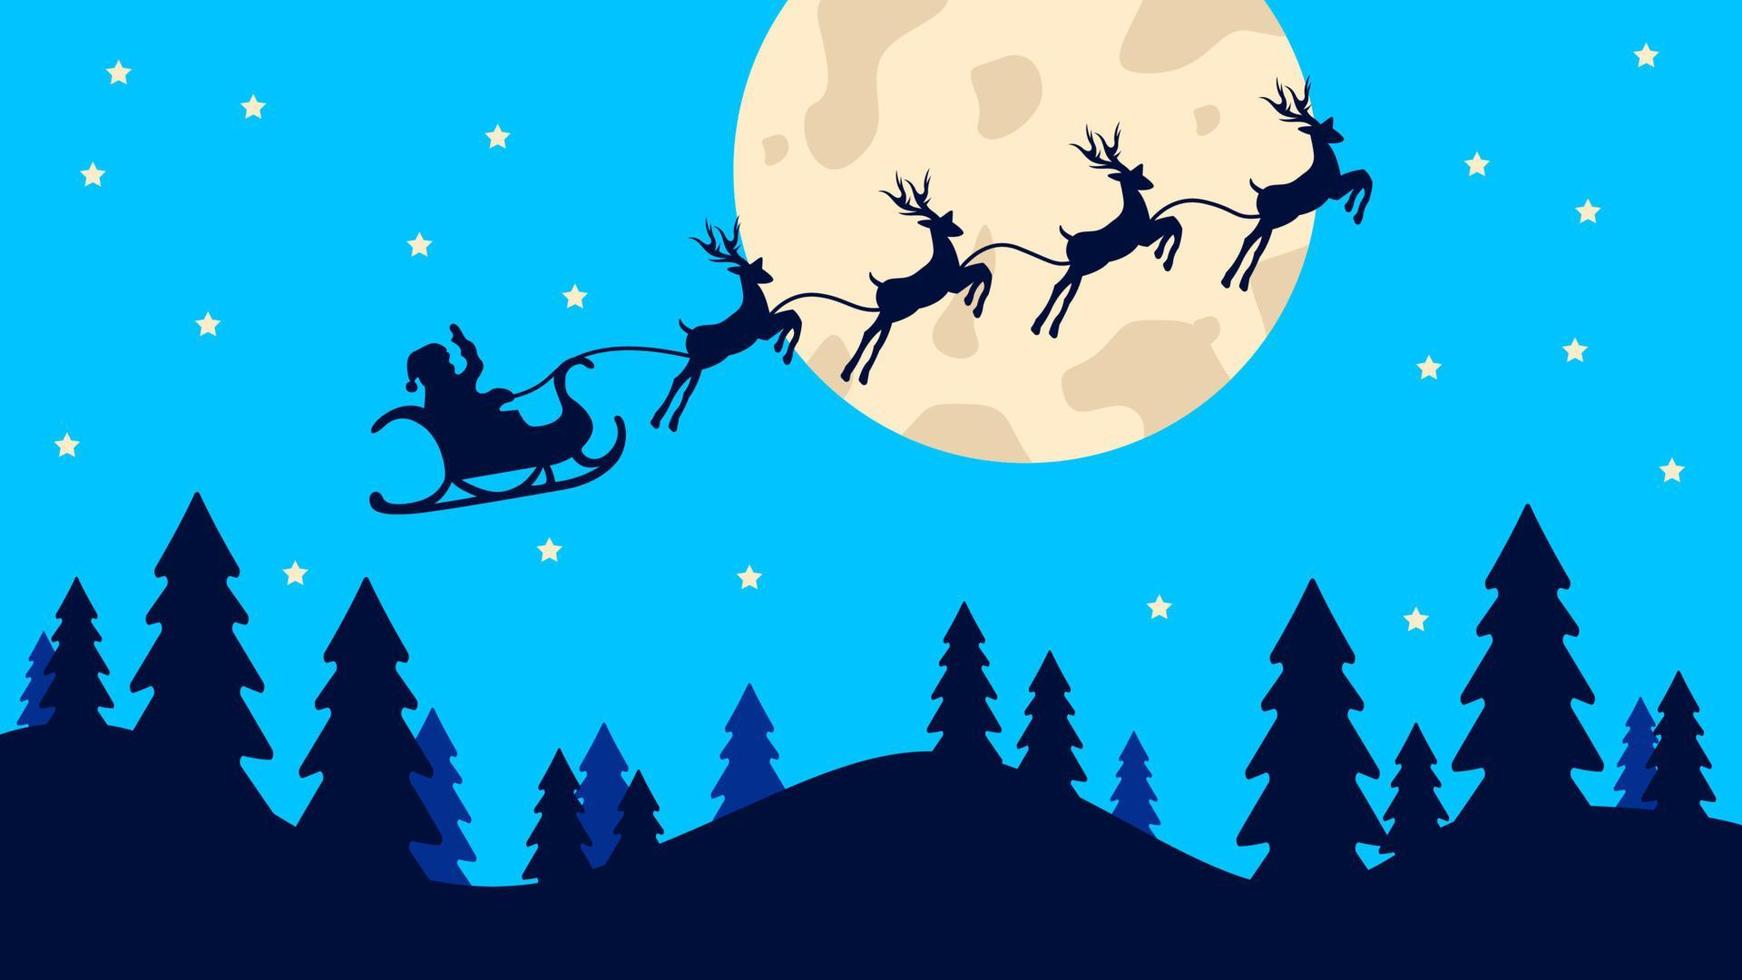 Santa Flying With Reindeer Background vector